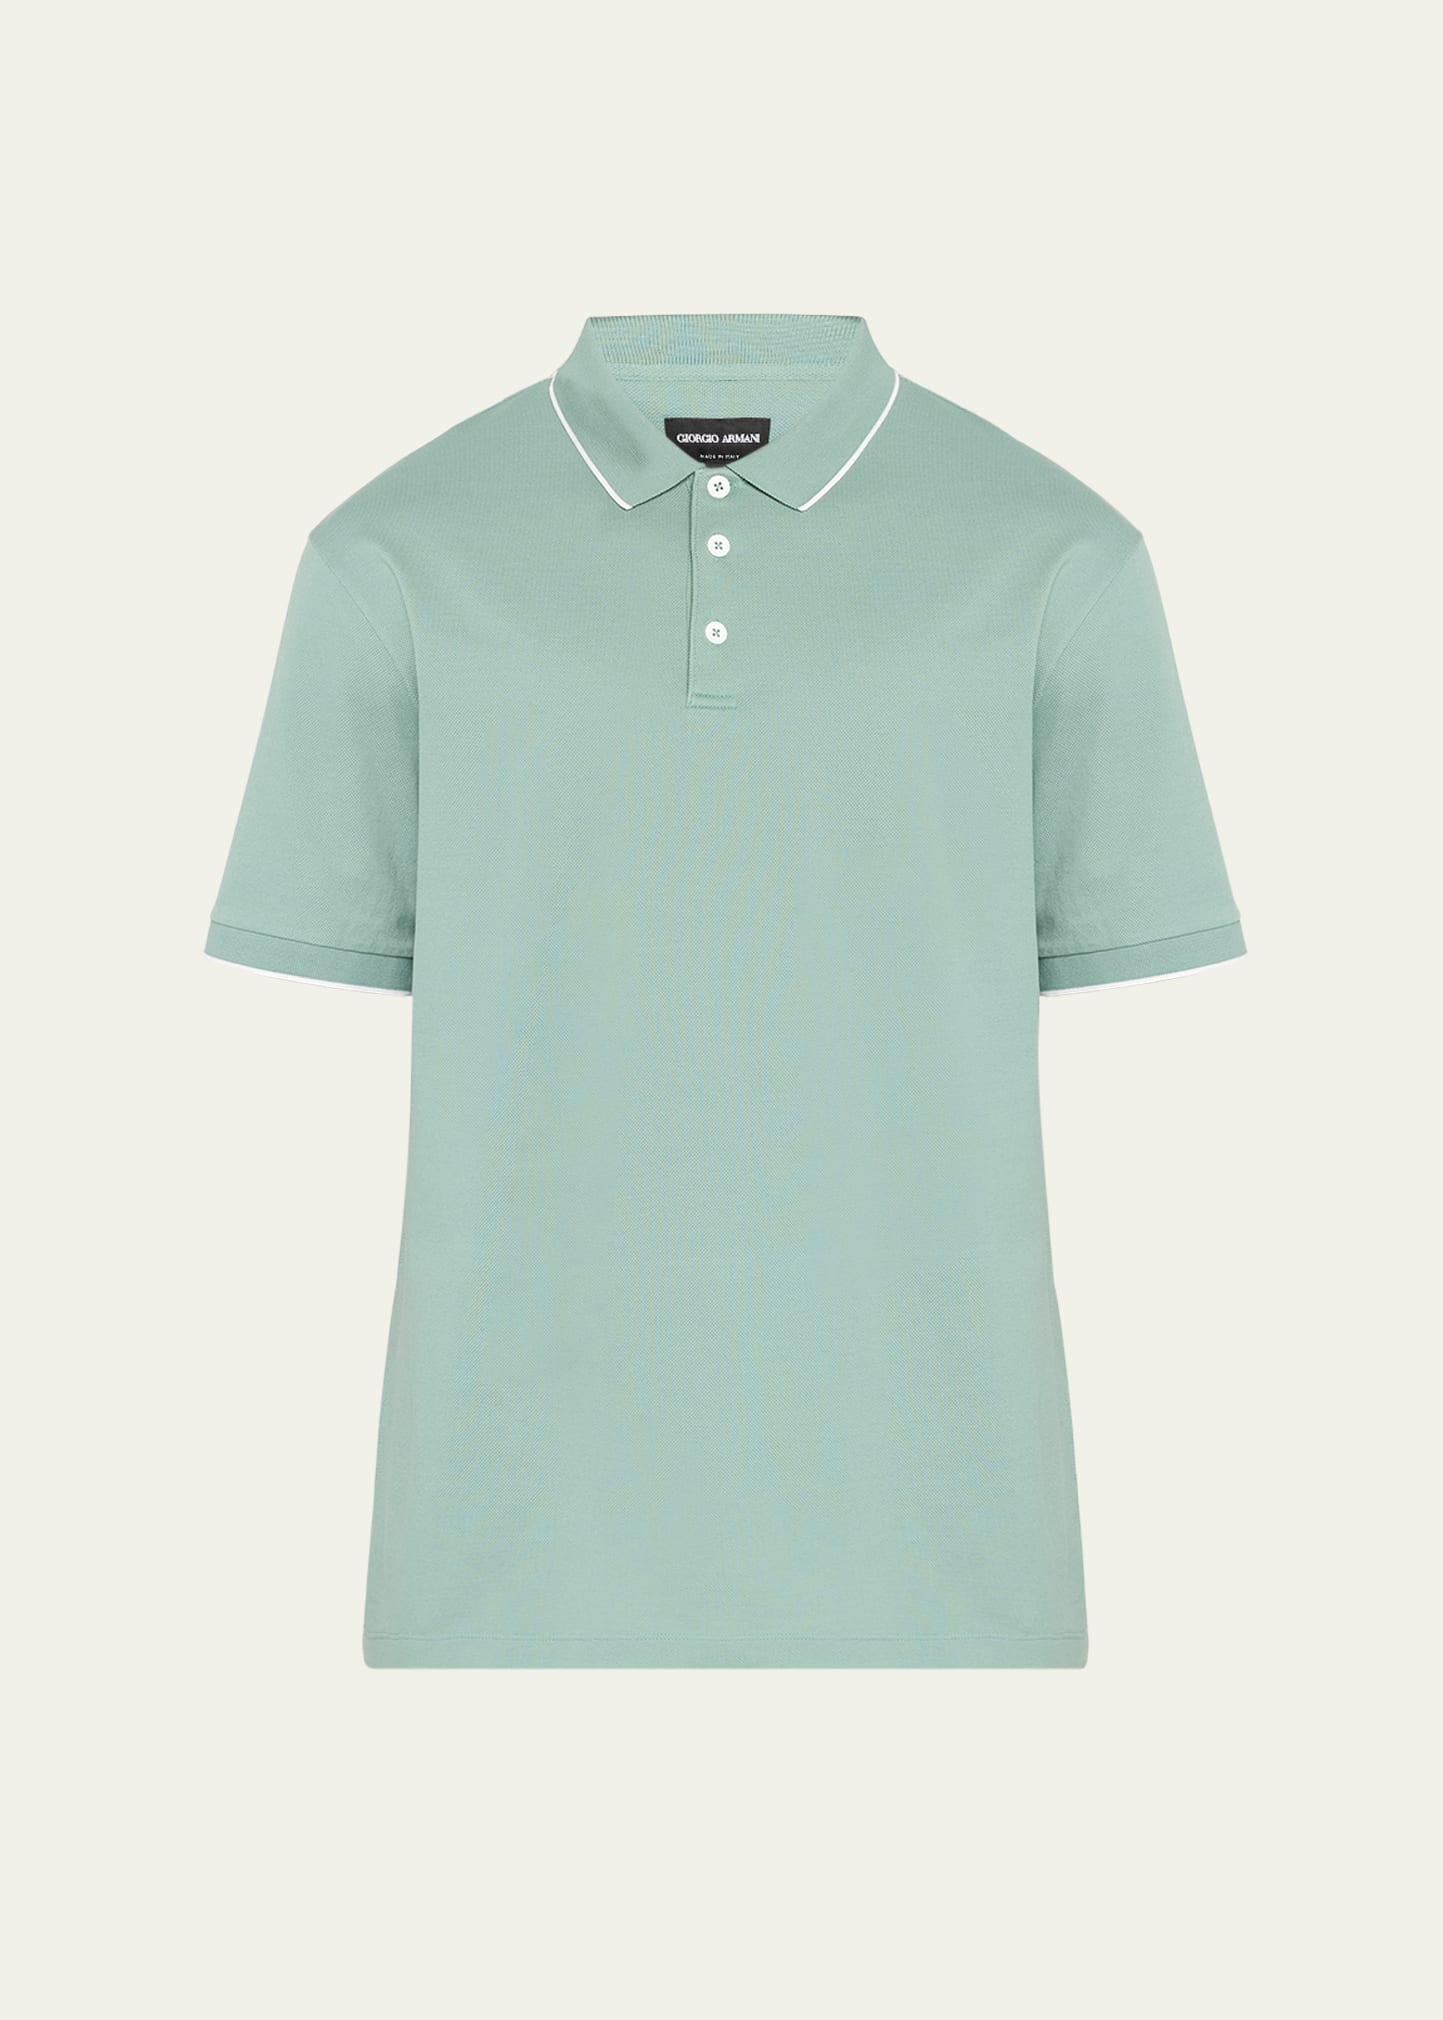 Giorgio Armani Men's Tipped Polo Shirt In Green